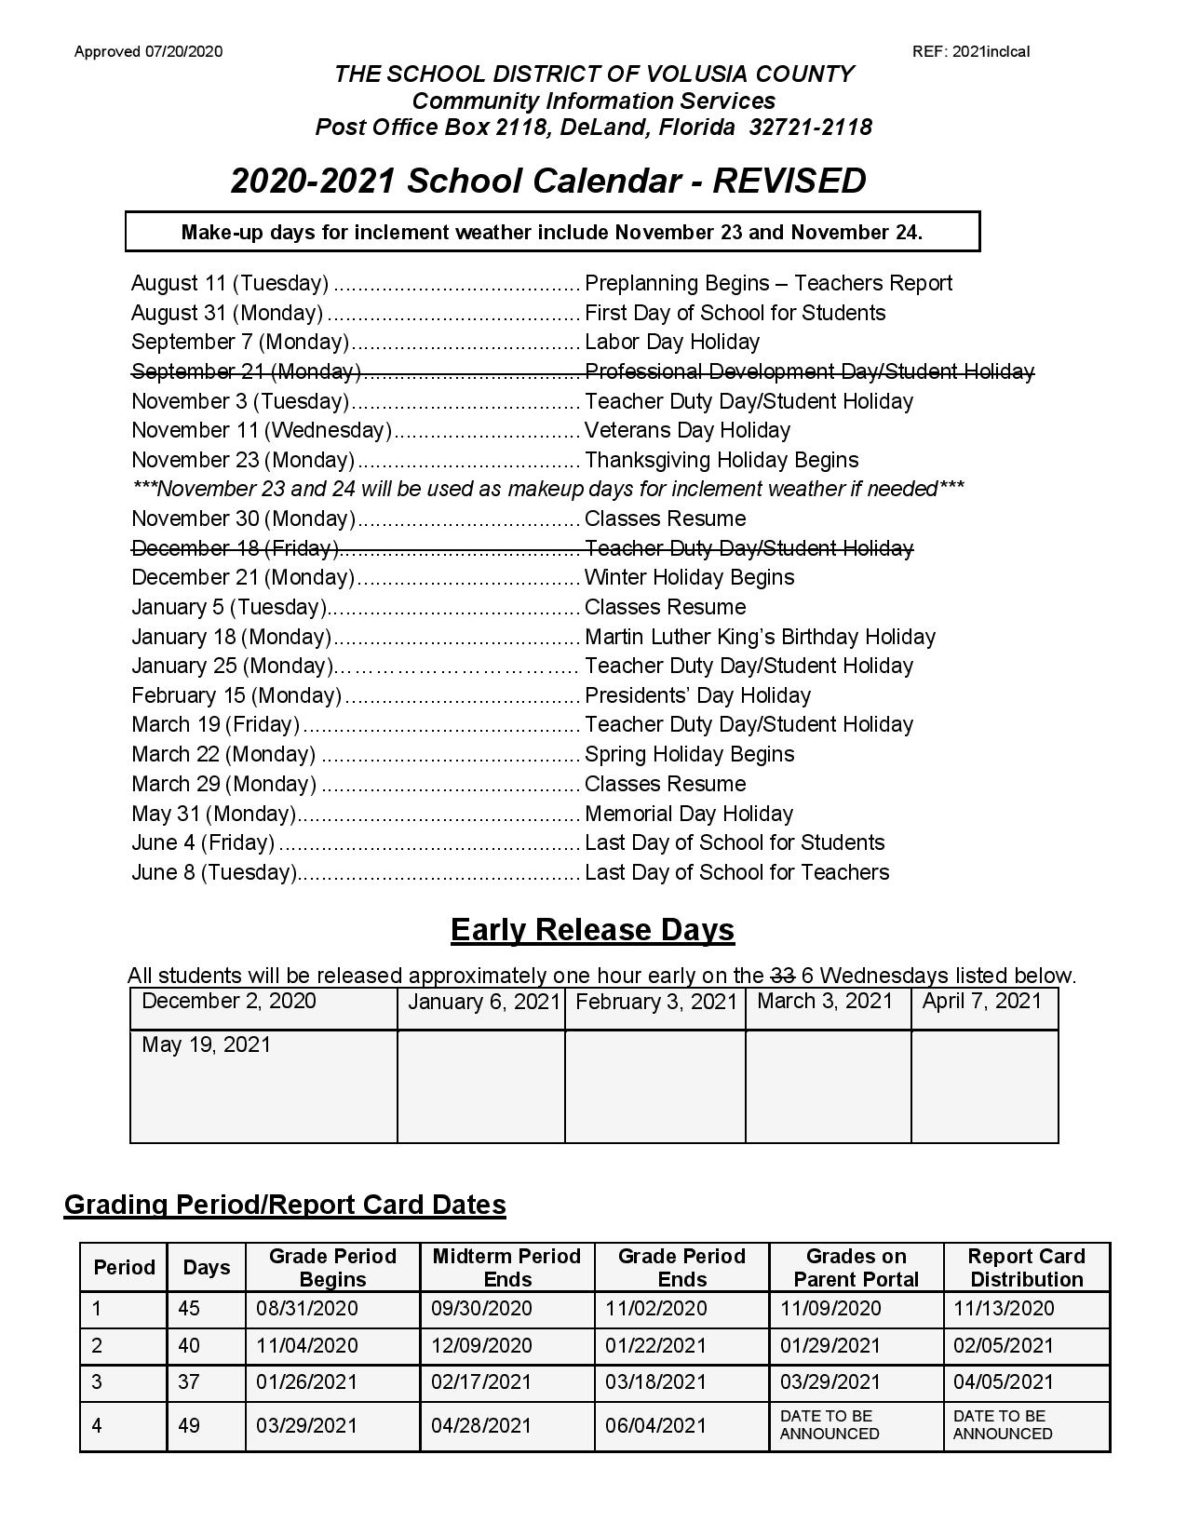 Volusia County Schools Calendar 2020-2021 in PDF